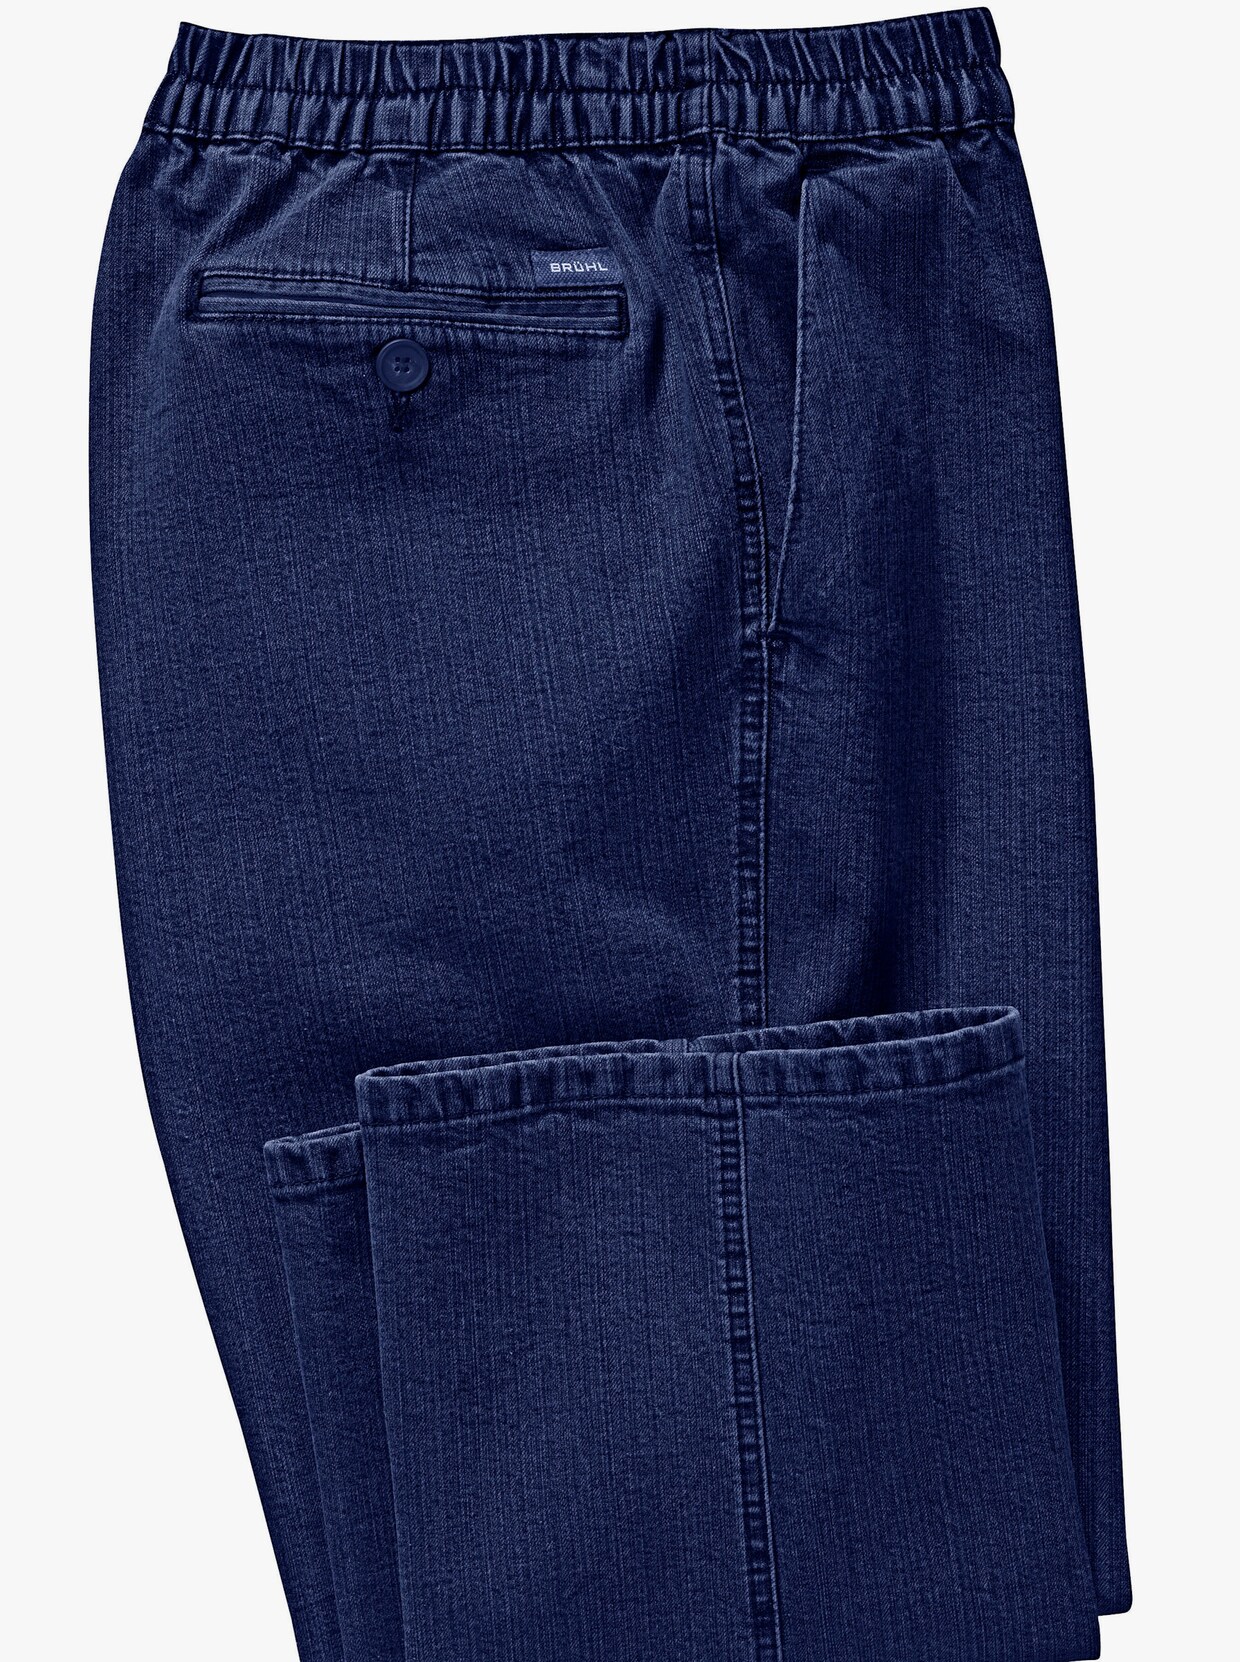 Jeans - blue stone